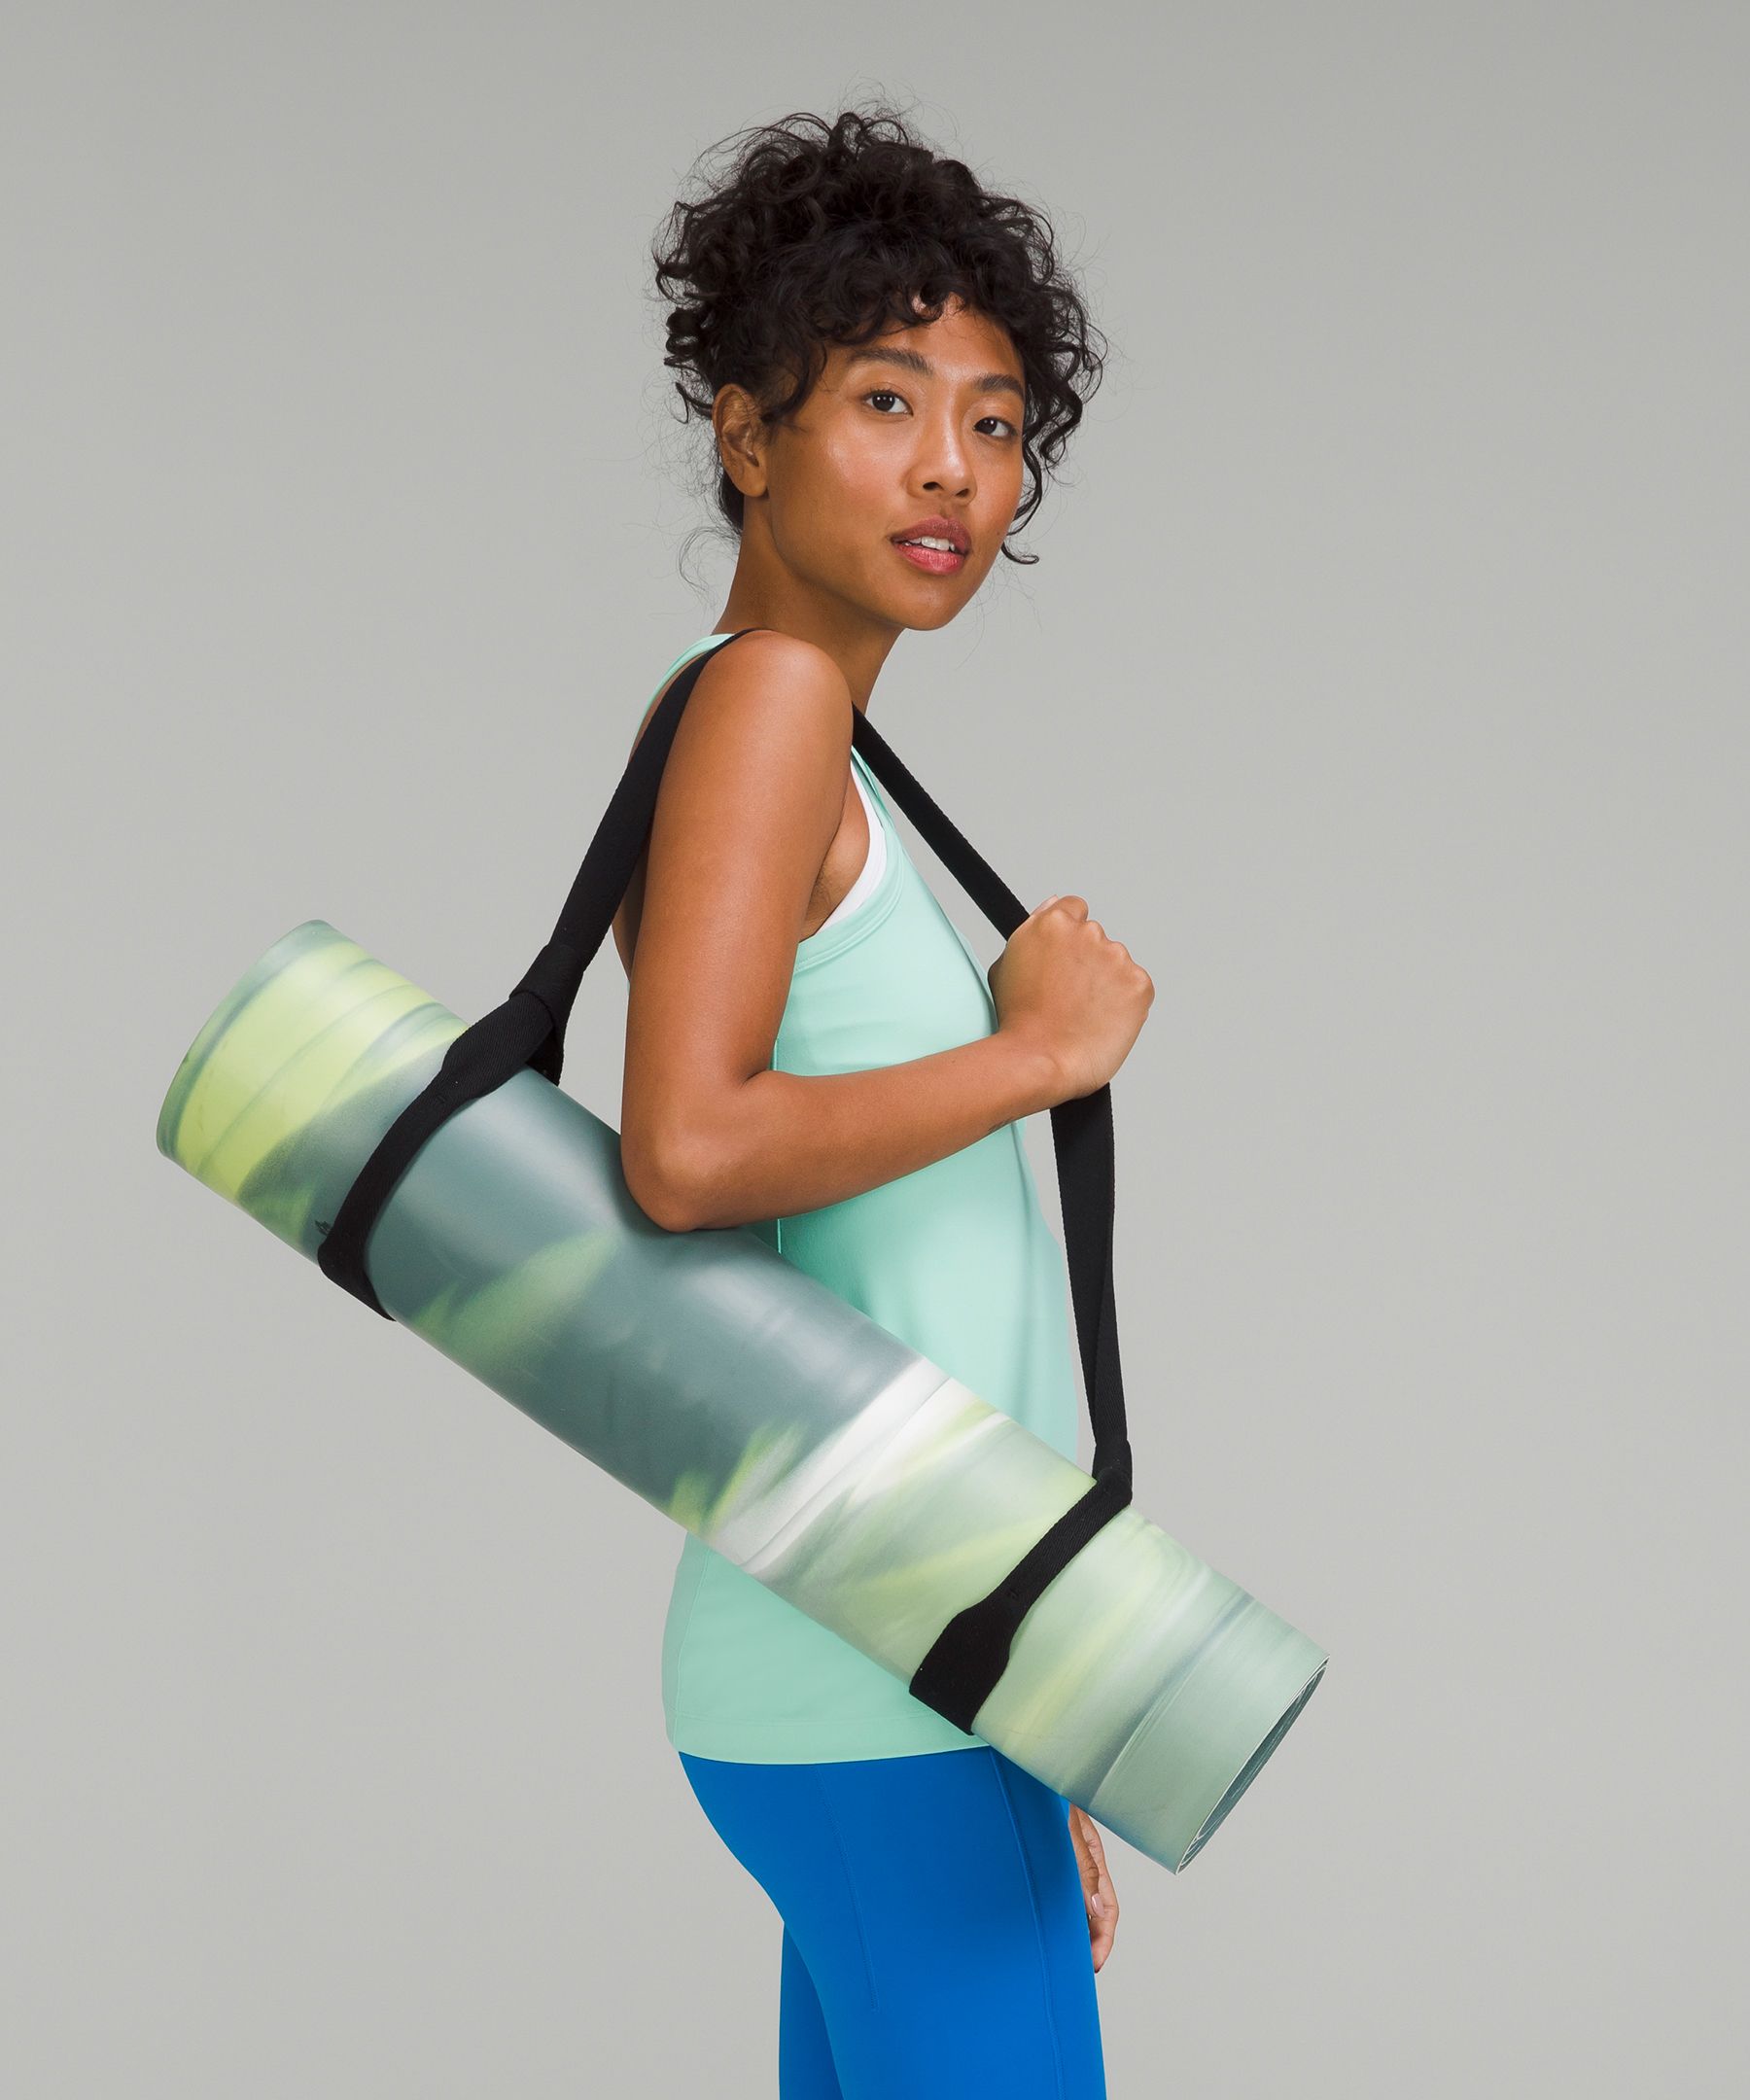 Lululemon Adjustable Yoga Mat Bag